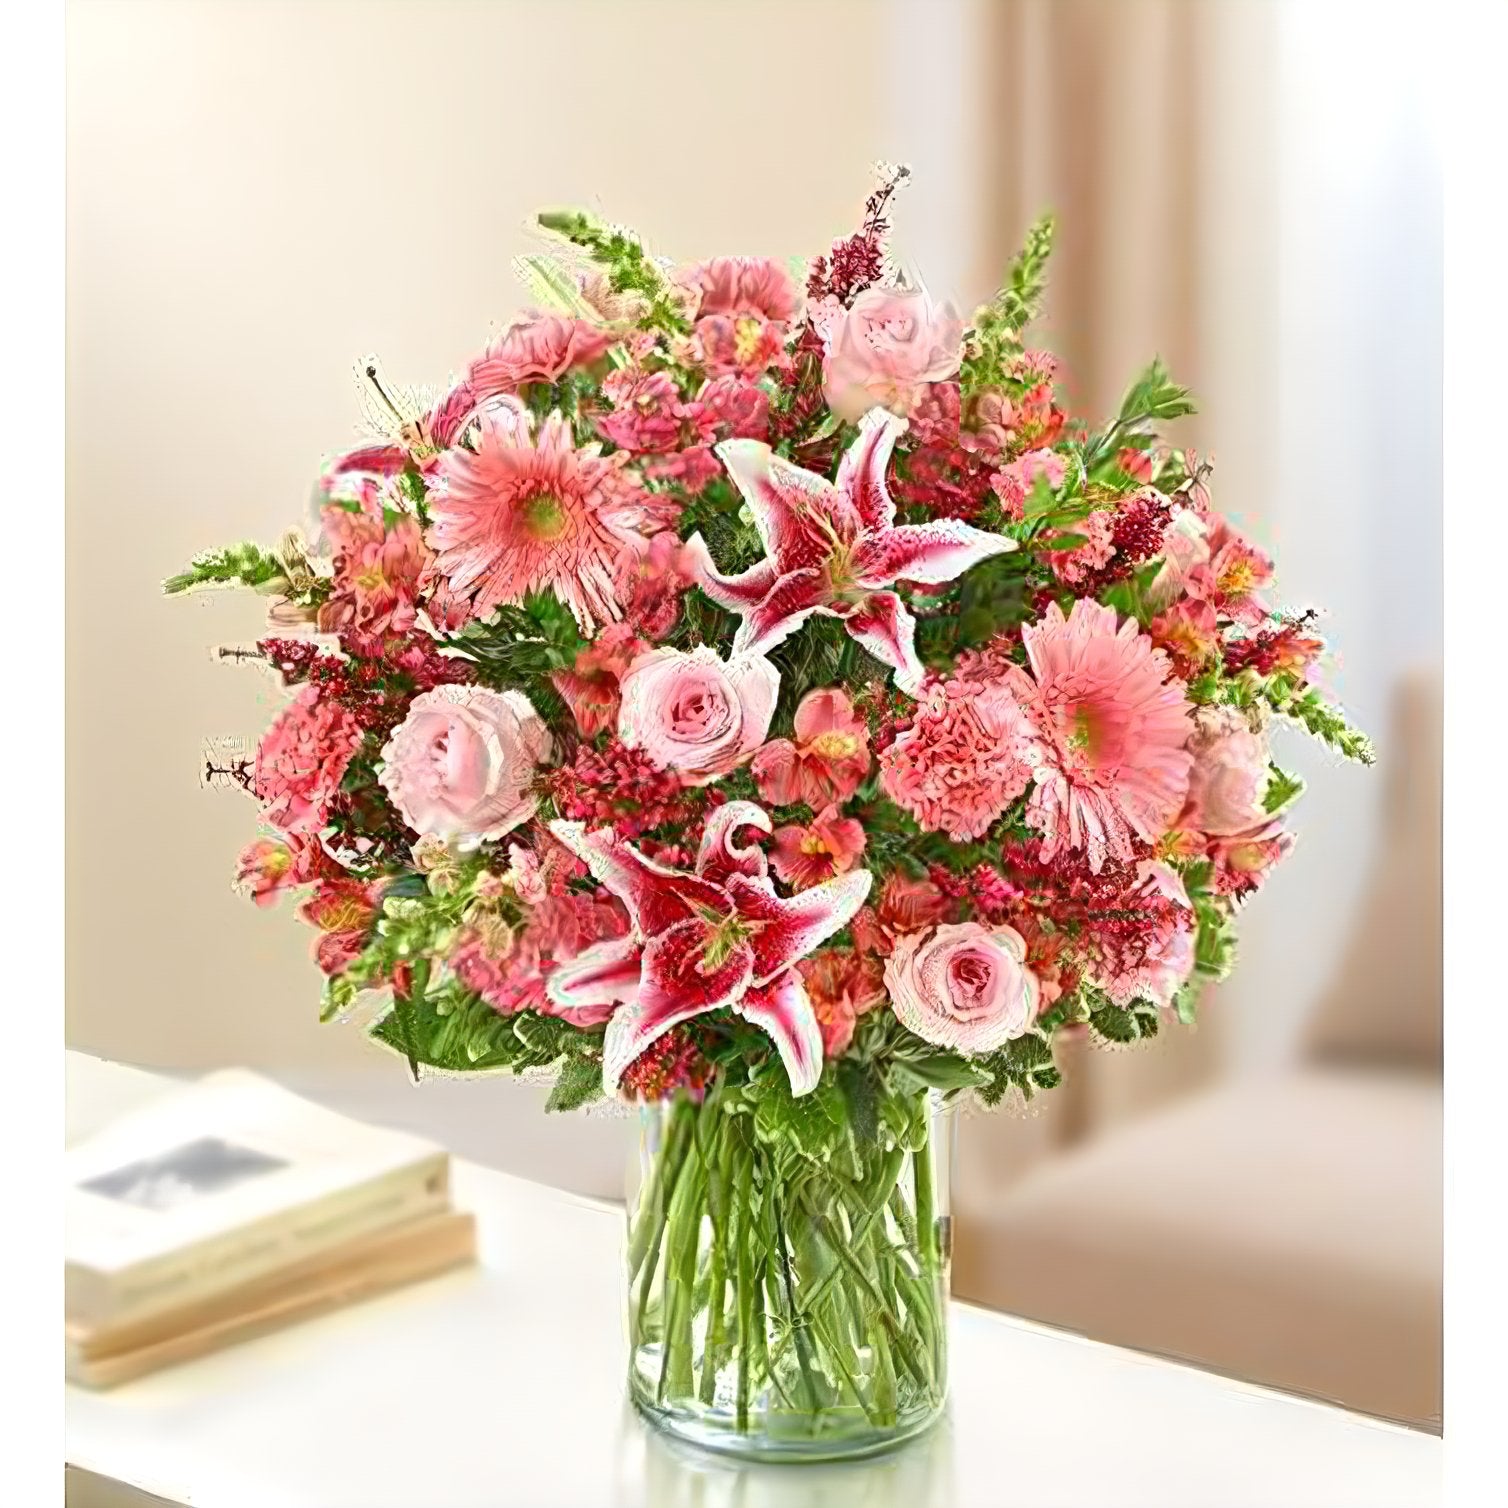 Sincerest Sorrow - All Pink - Funeral > Vase Arrangements - Queens Flower Delivery